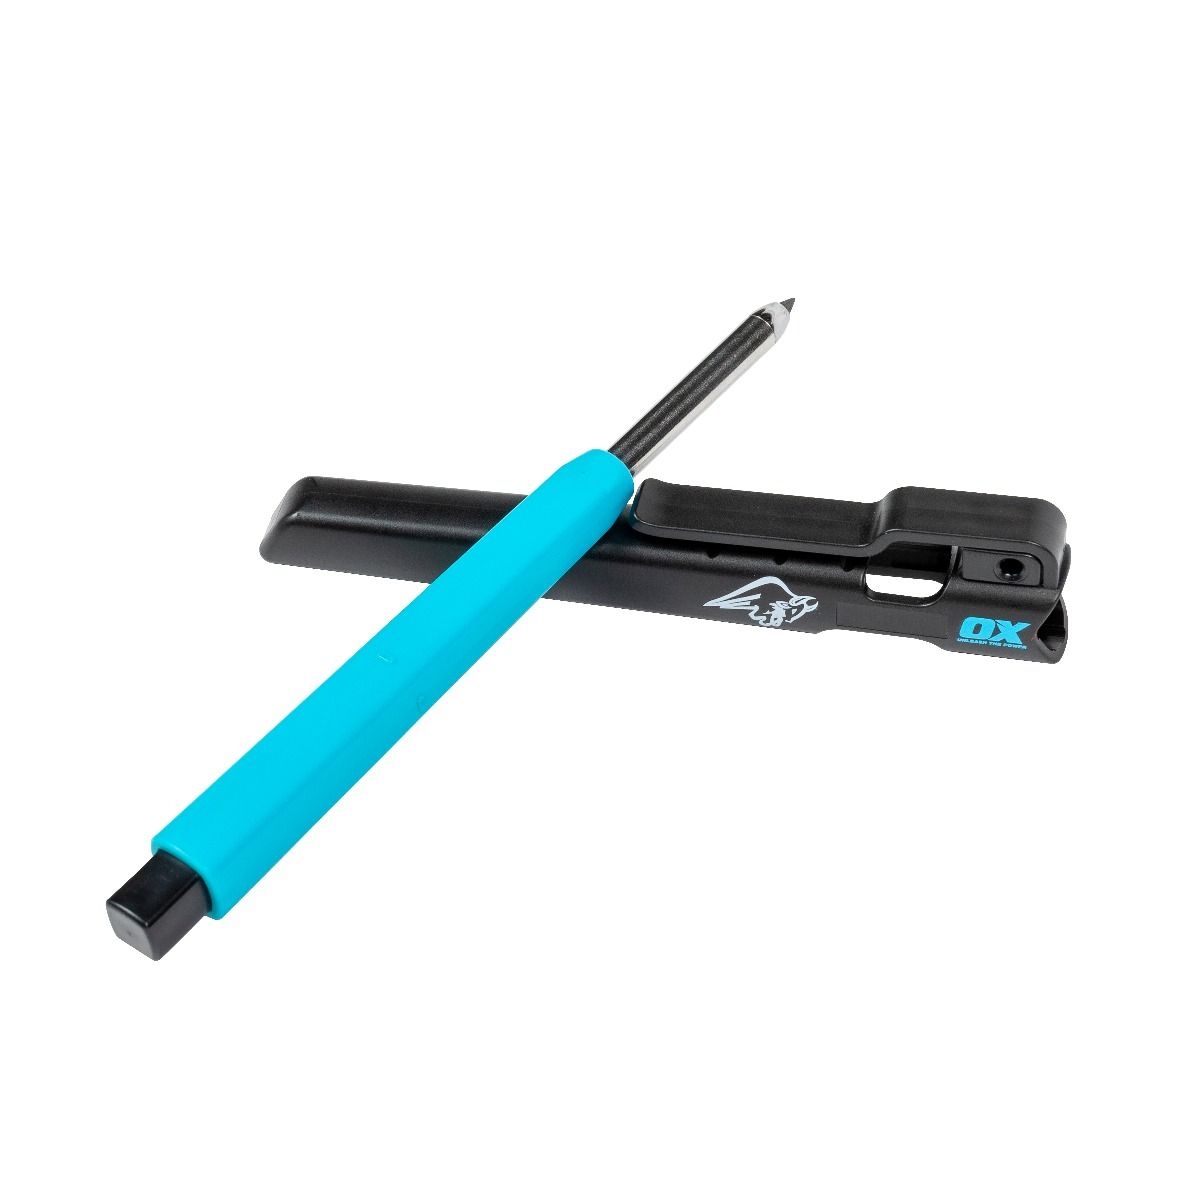 OX Tuff Carbon - Marking Pencil